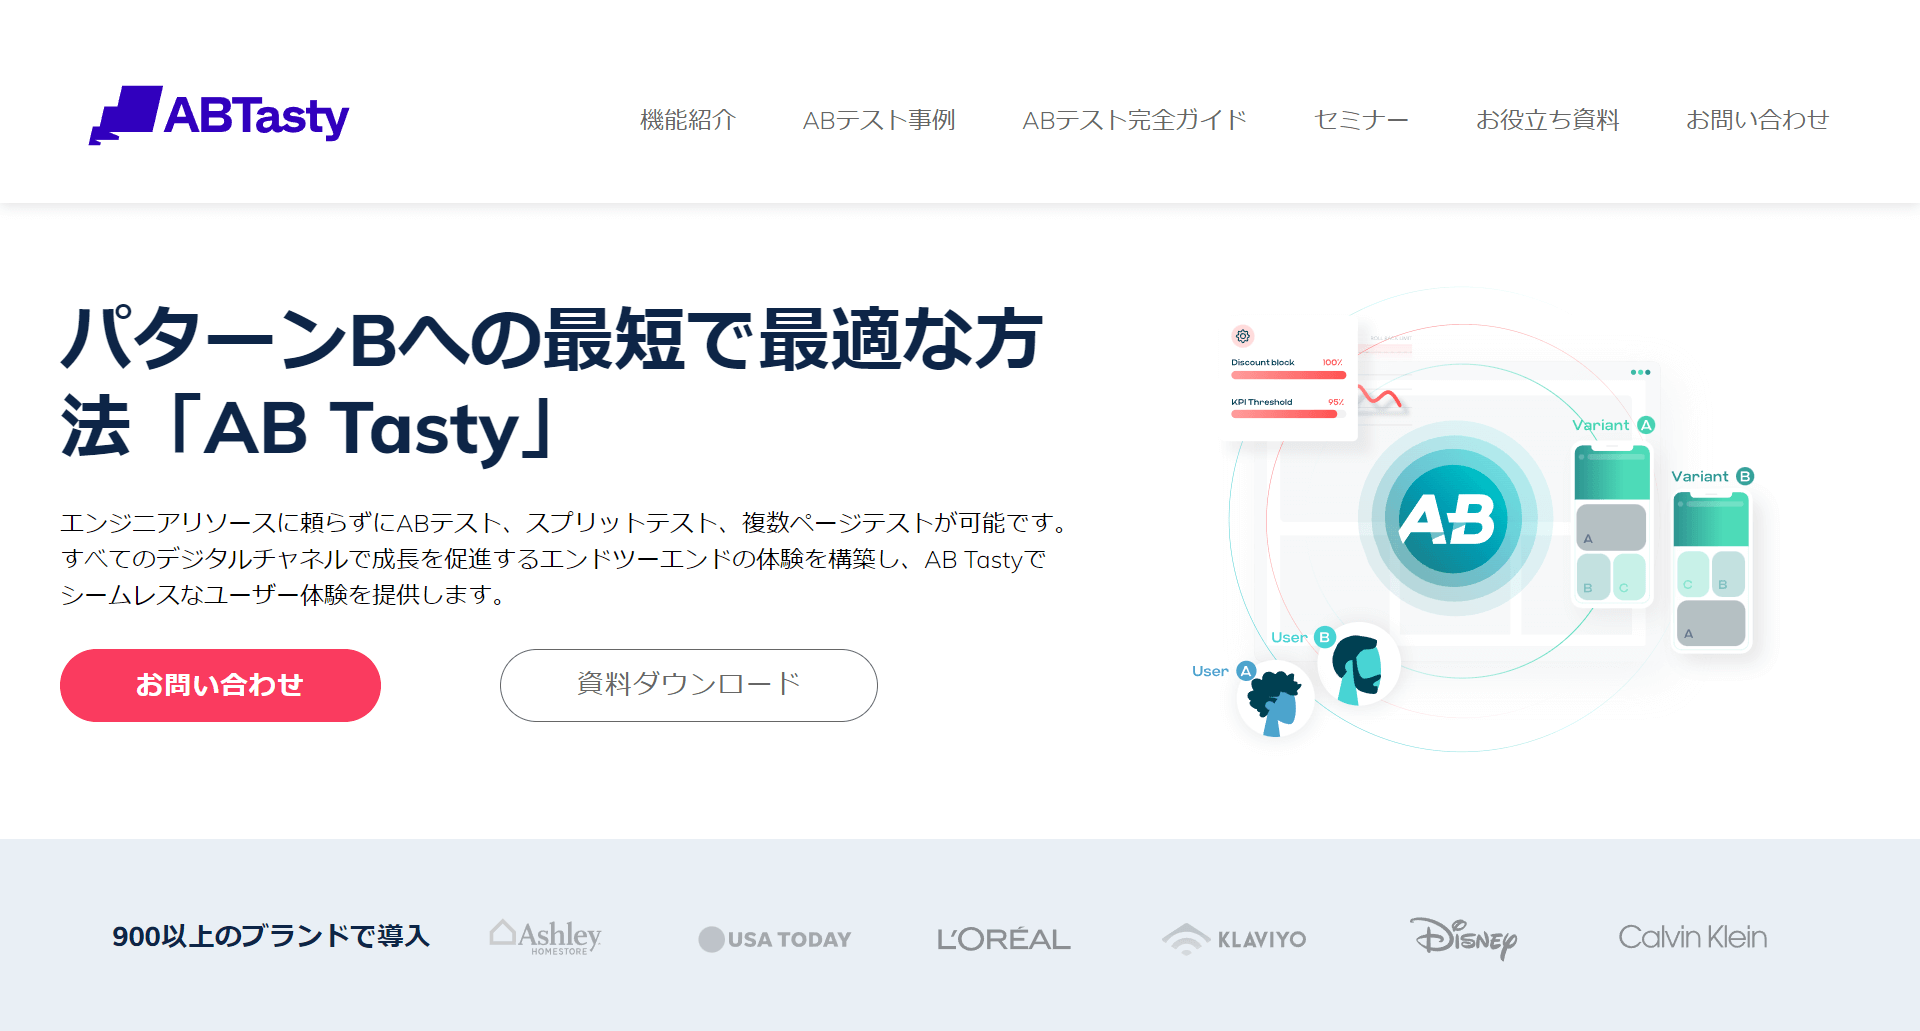 ABテストツール「AB Tasty」日本公式サイト byギャプライズ